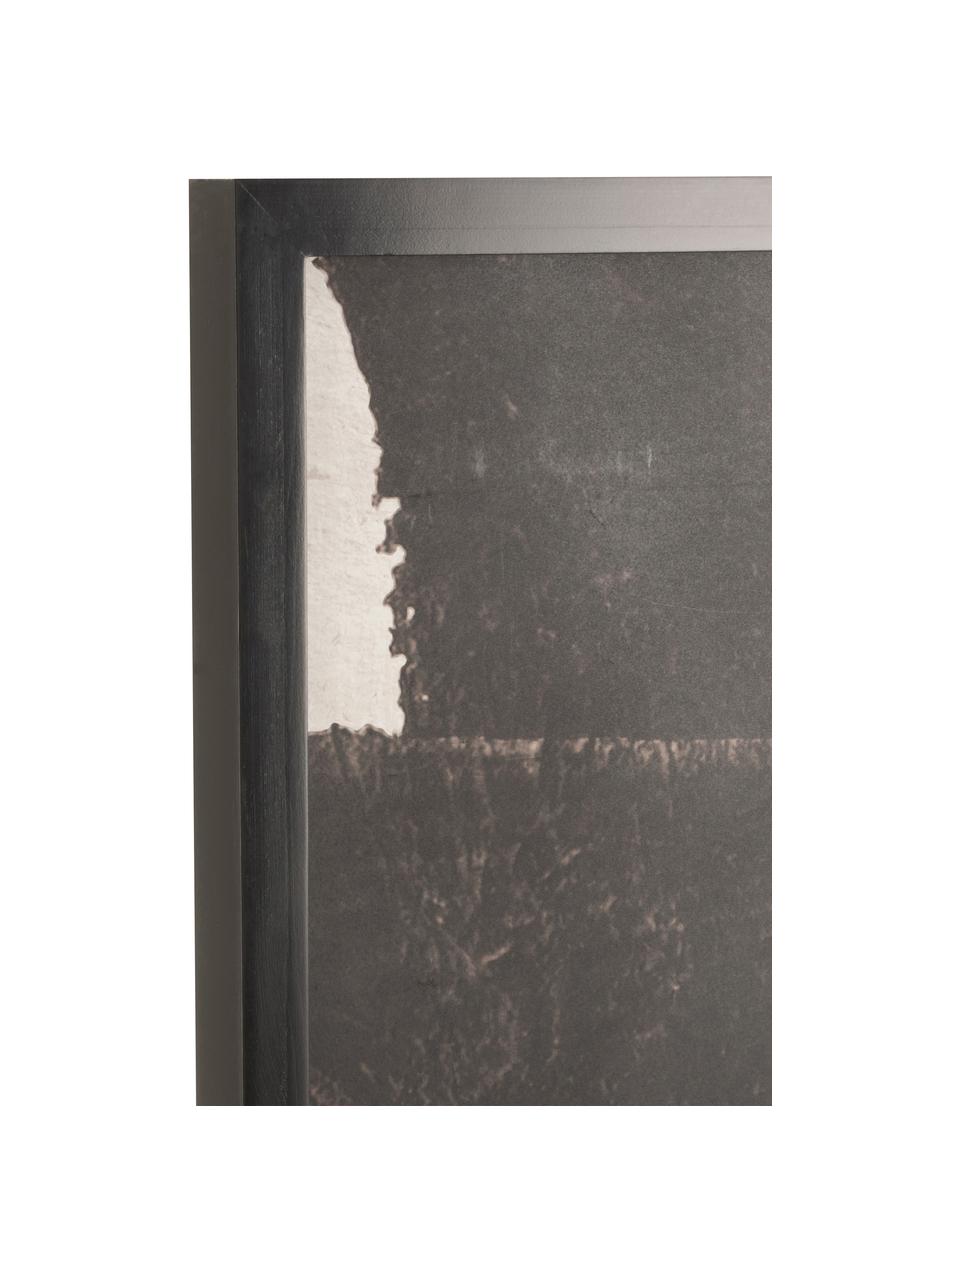 Zarámovaný tištěný obraz na plátně  Abstract, Černá, bílá, Š 110 cm, V 157 cm